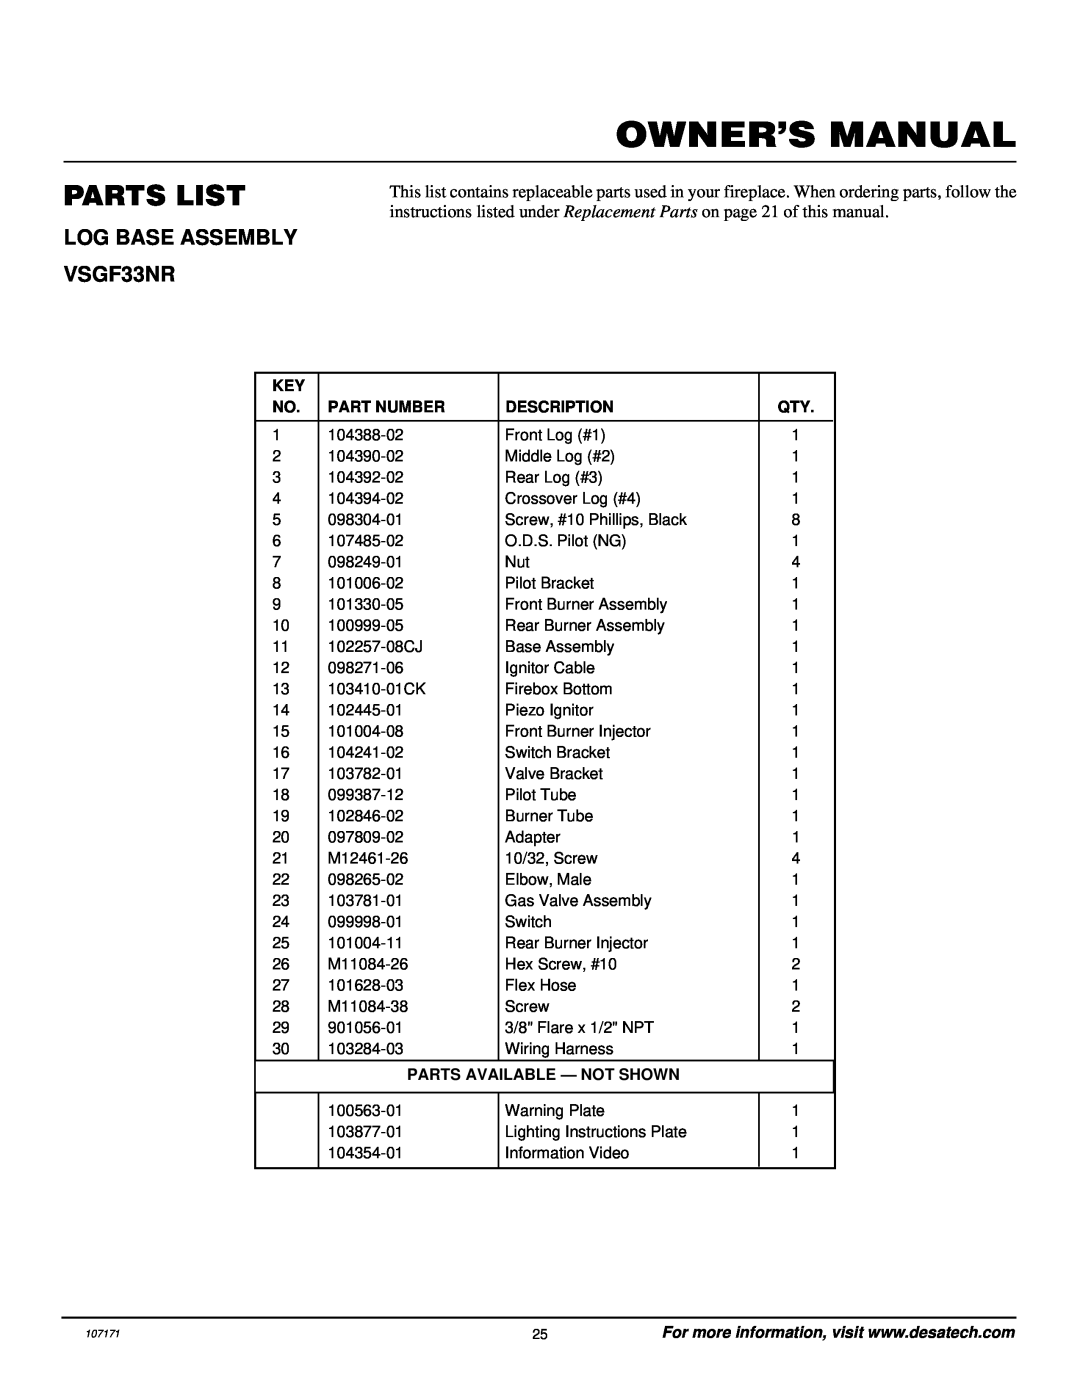 Desa installation manual Parts List, LOG BASE ASSEMBLY VSGF33NR, Part Number, Description, Parts Available - Not Shown 